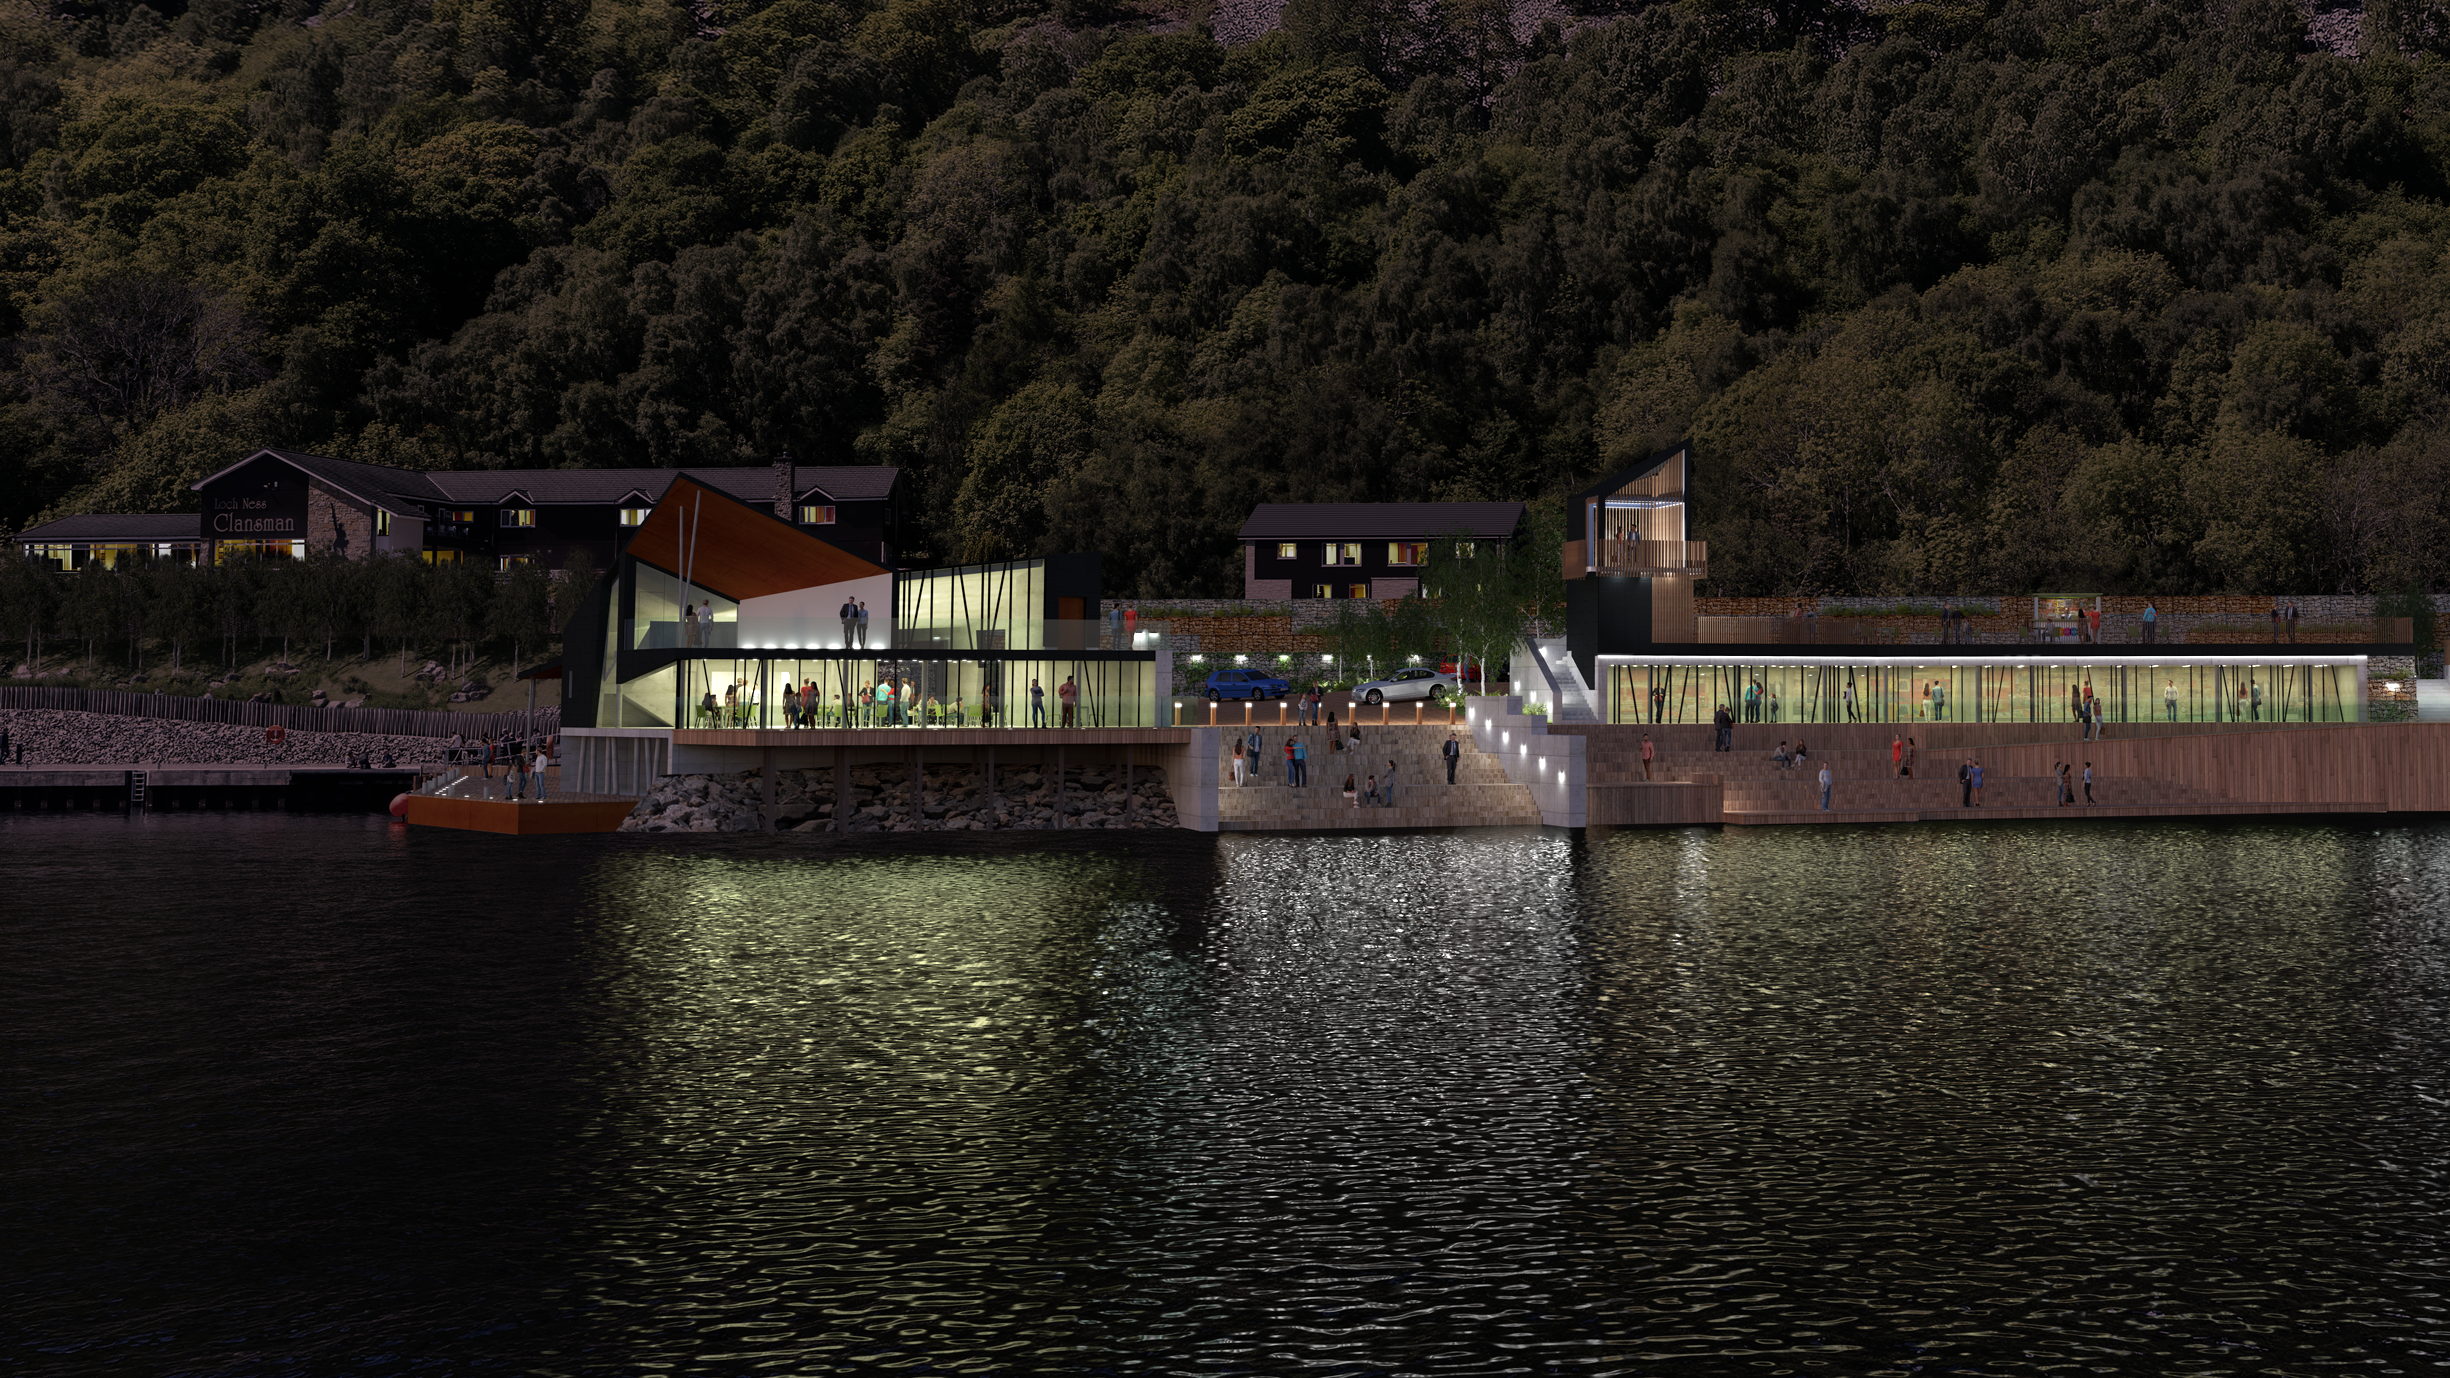 Loch Ness Visitor Centre